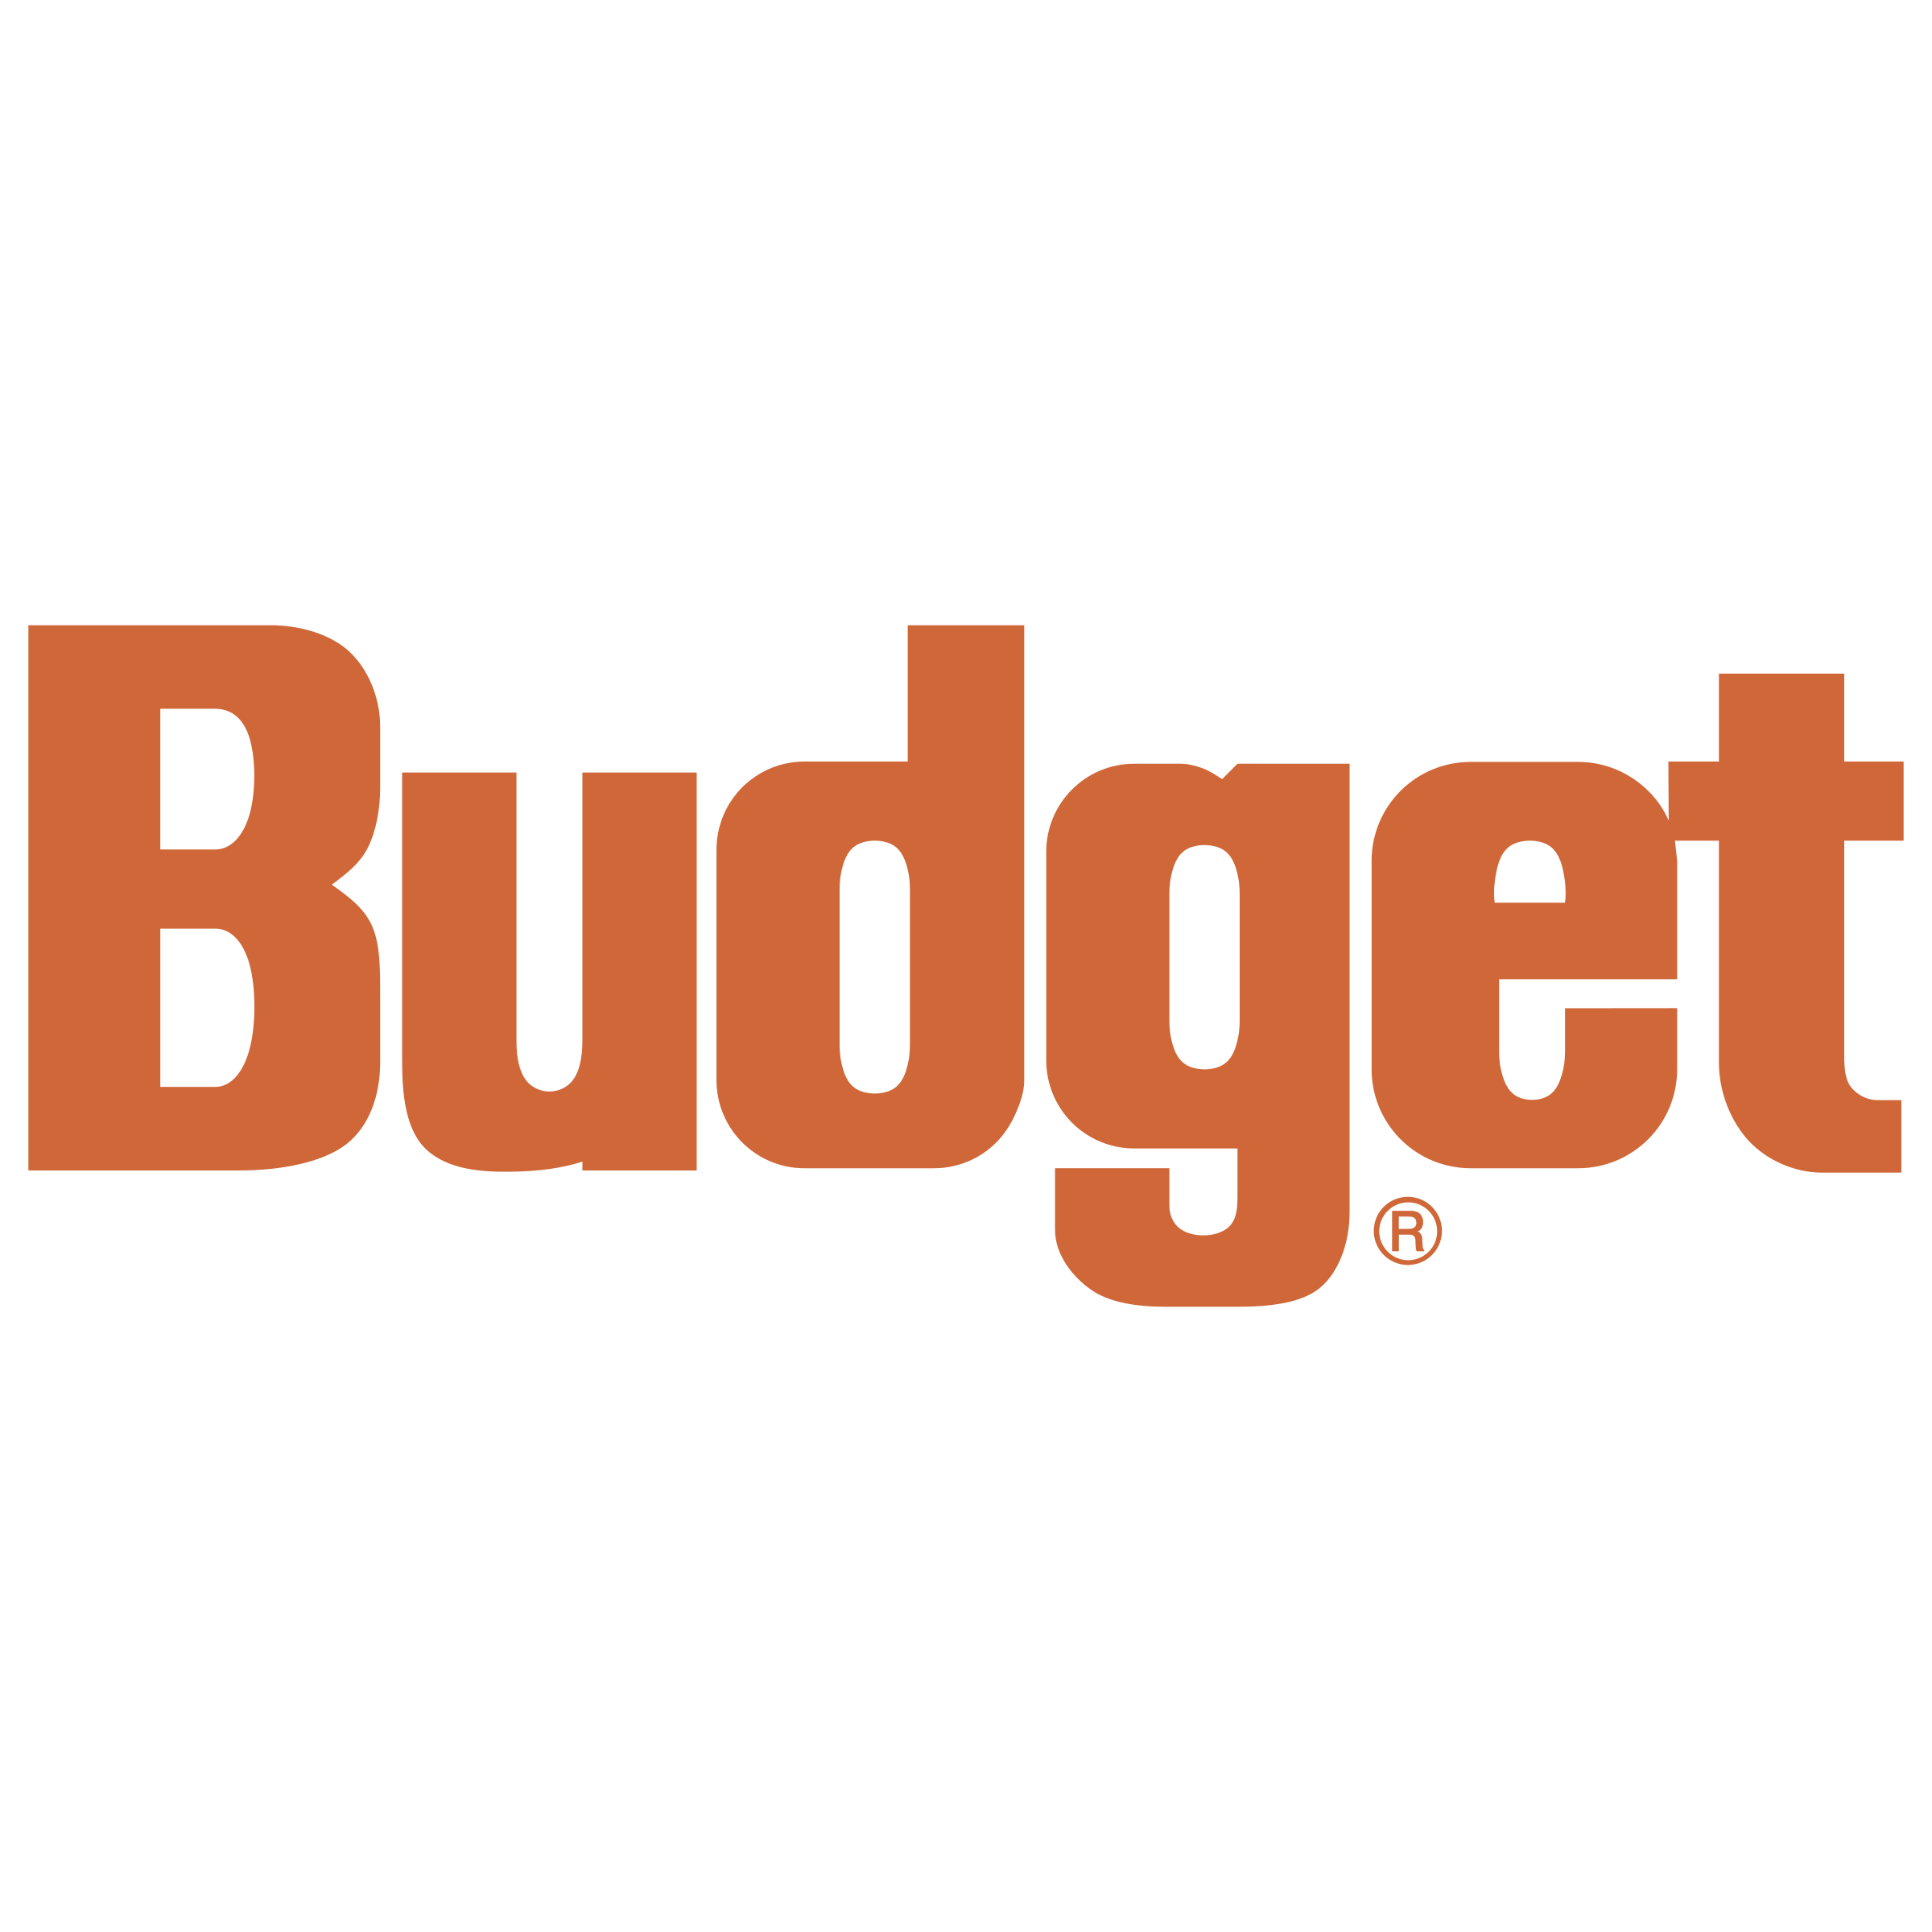 Budget Free HD Image PNG Image